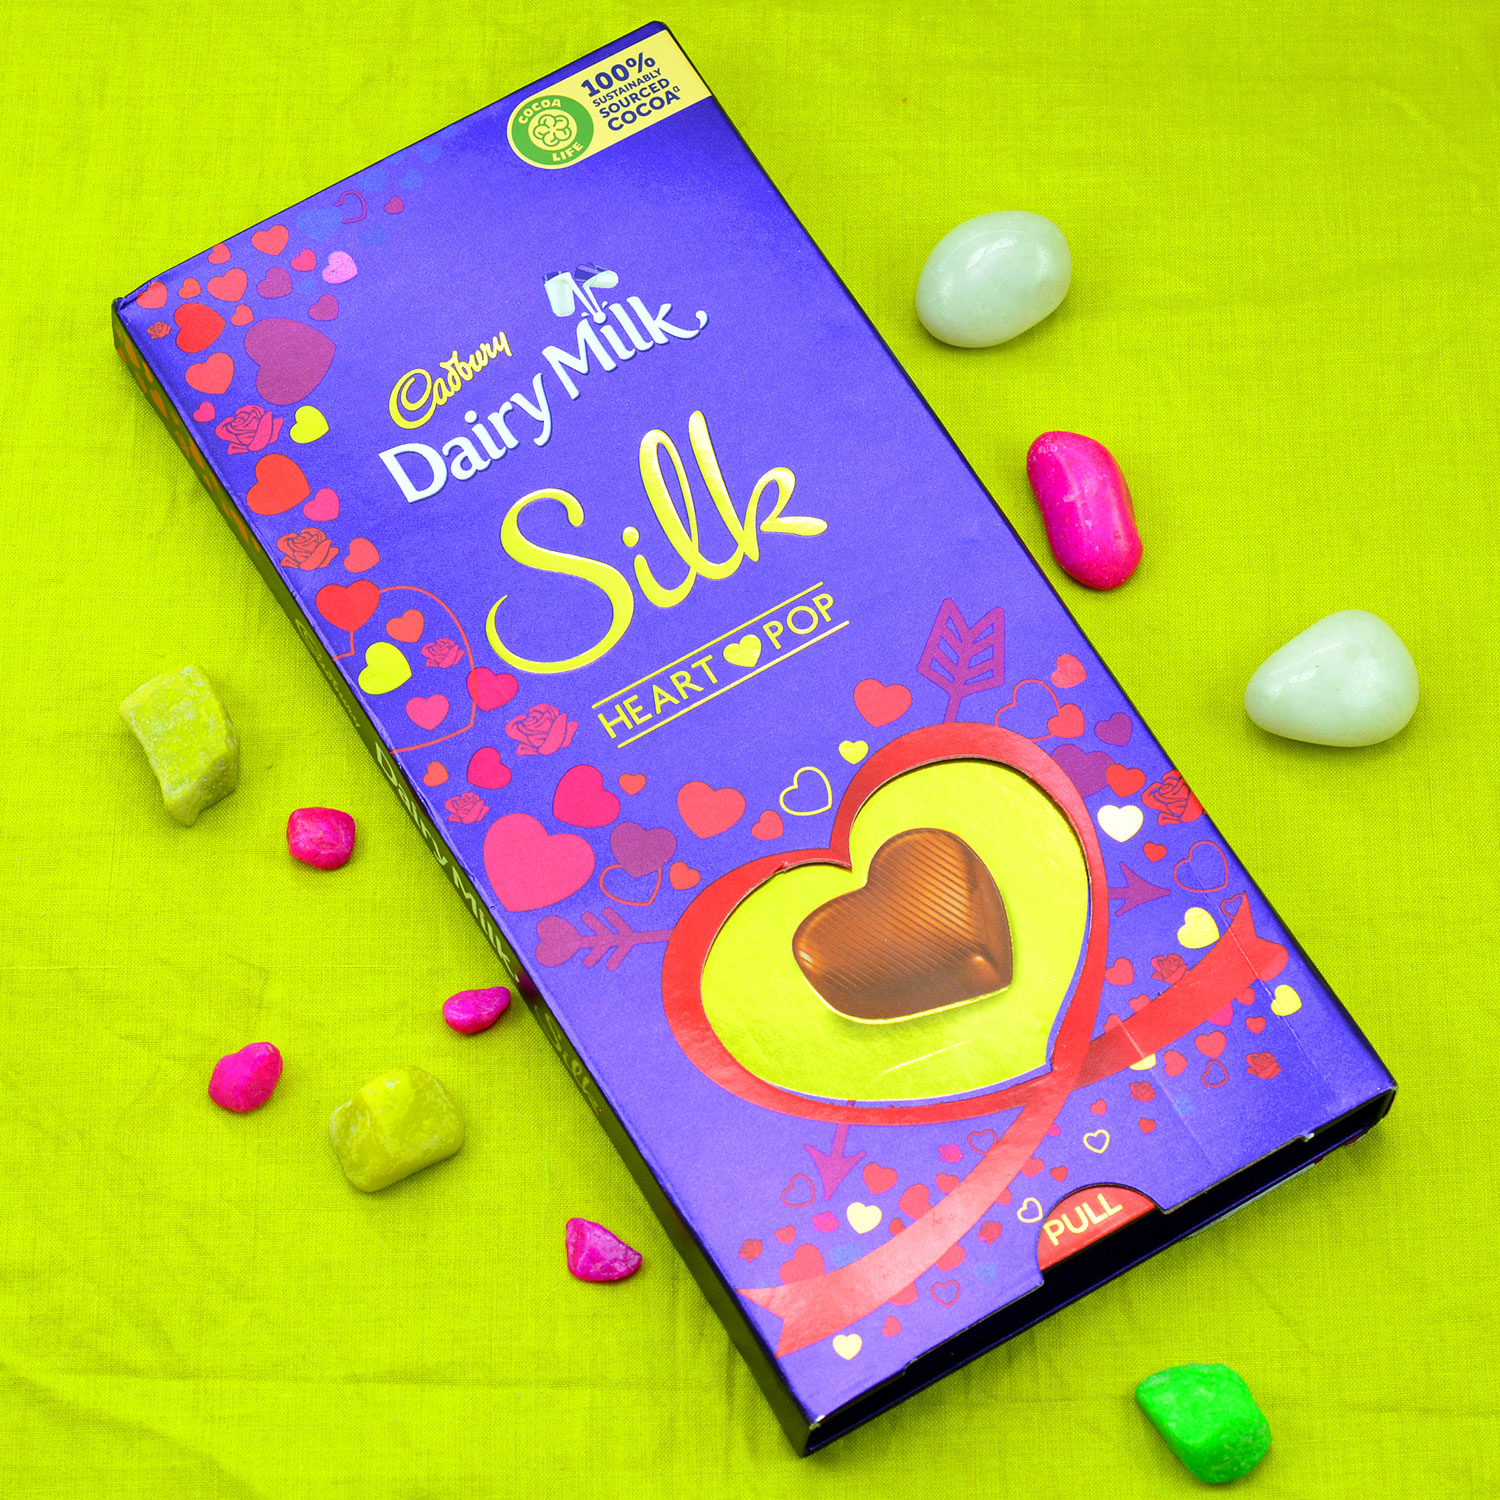 New Festival Special Cadbury Silk Heat Pop Chocolate